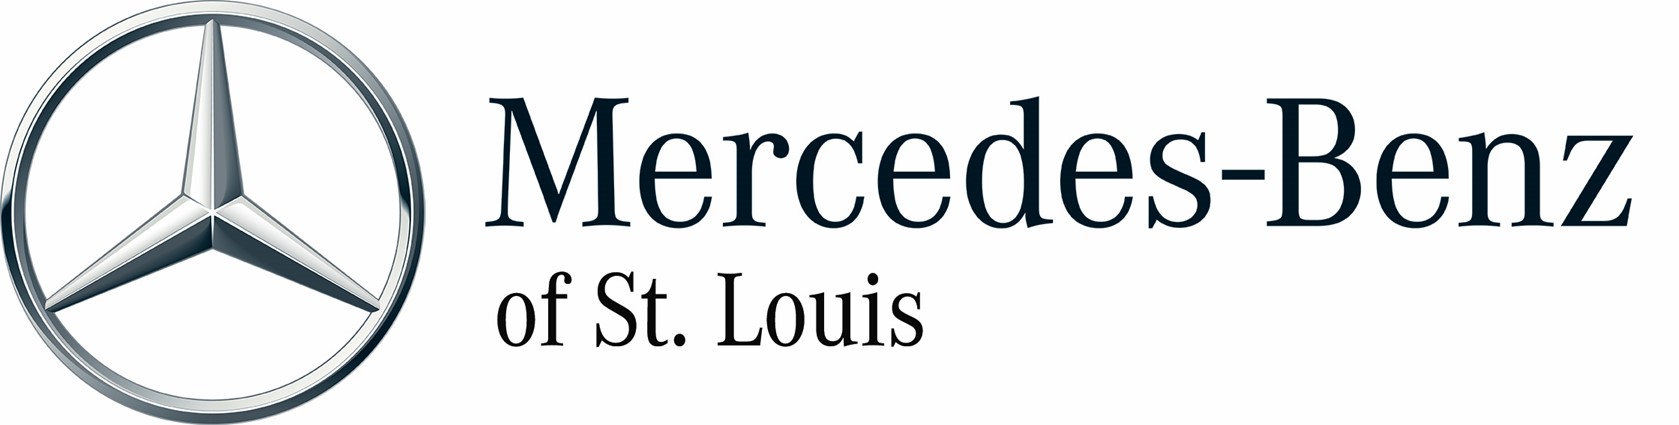 Mercedes-Benz of St. Louis